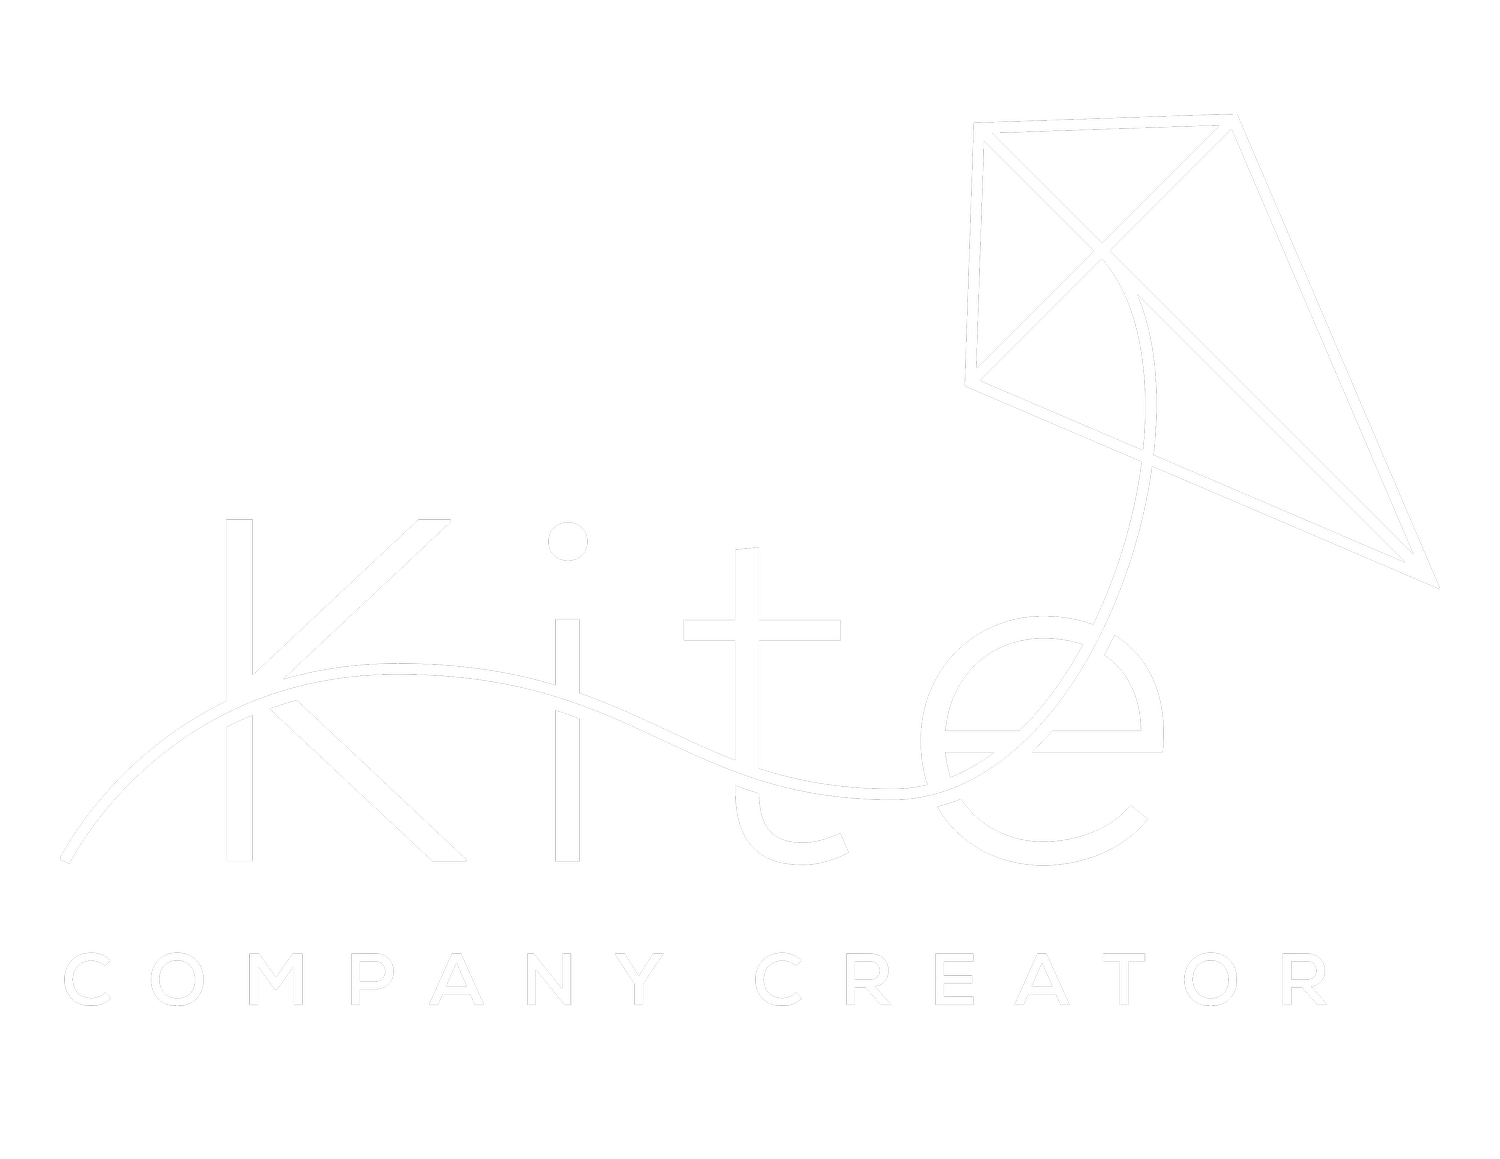 Kite Company Creator